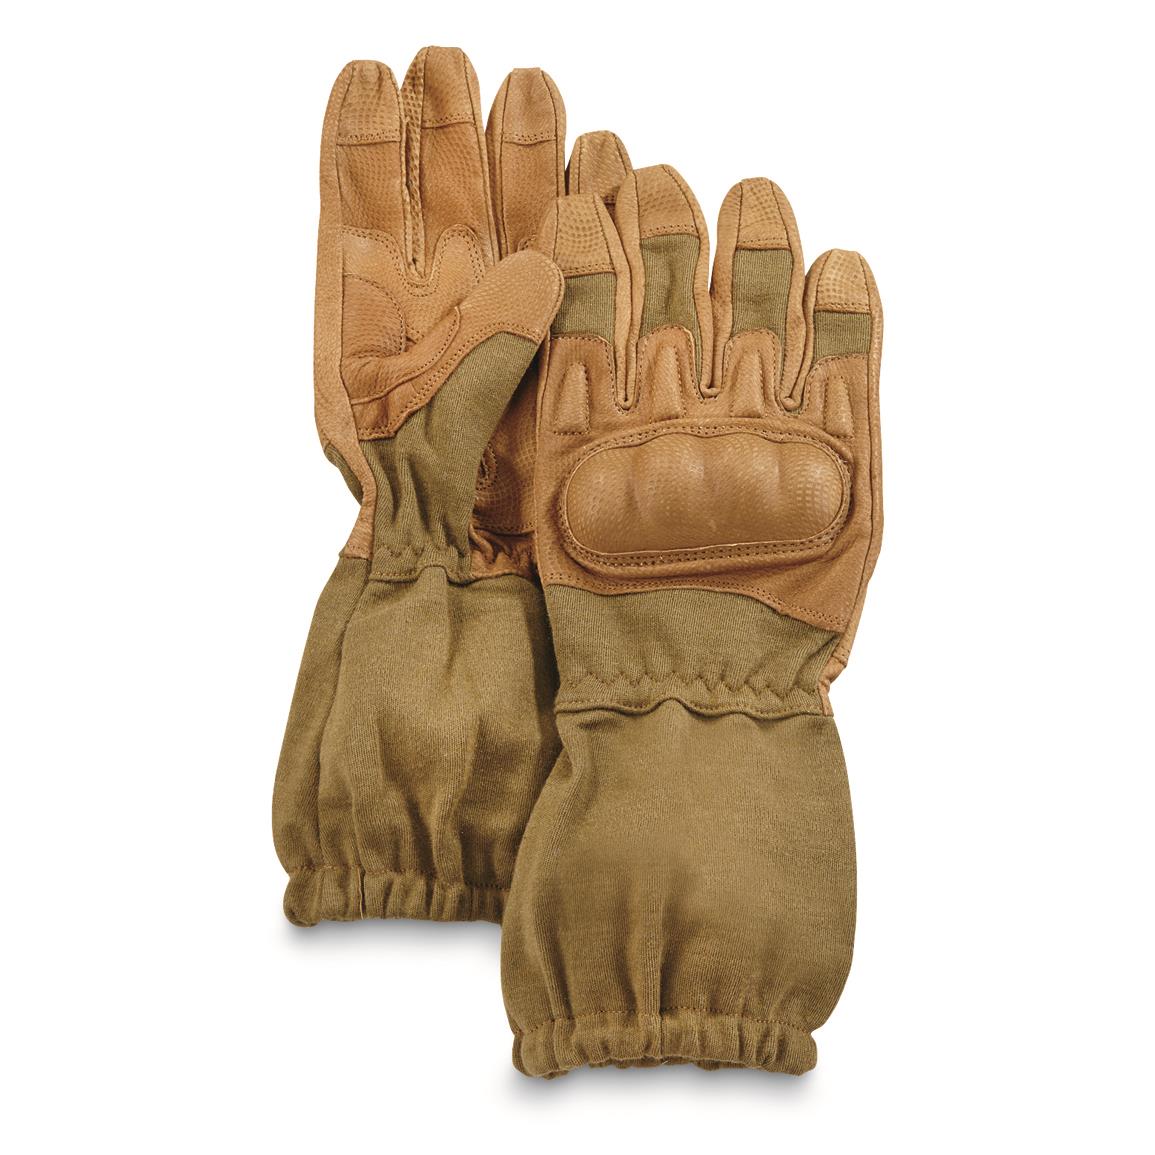 Mil-Tec Flame-resistant Hard-knuckle Gloves